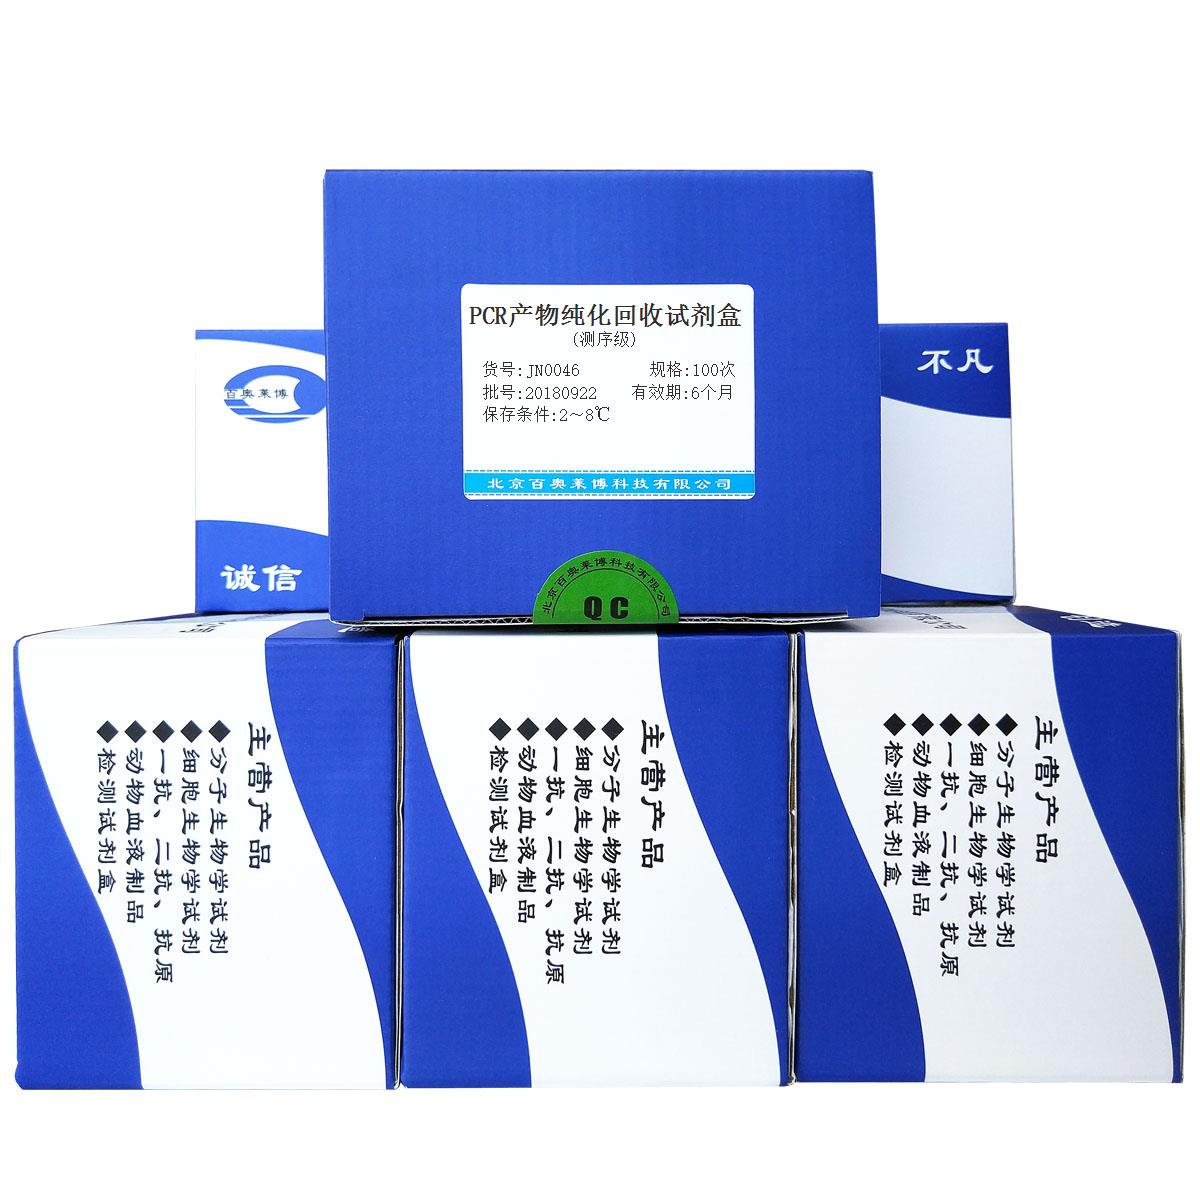 PCR产物纯化回收试剂盒(测序级)